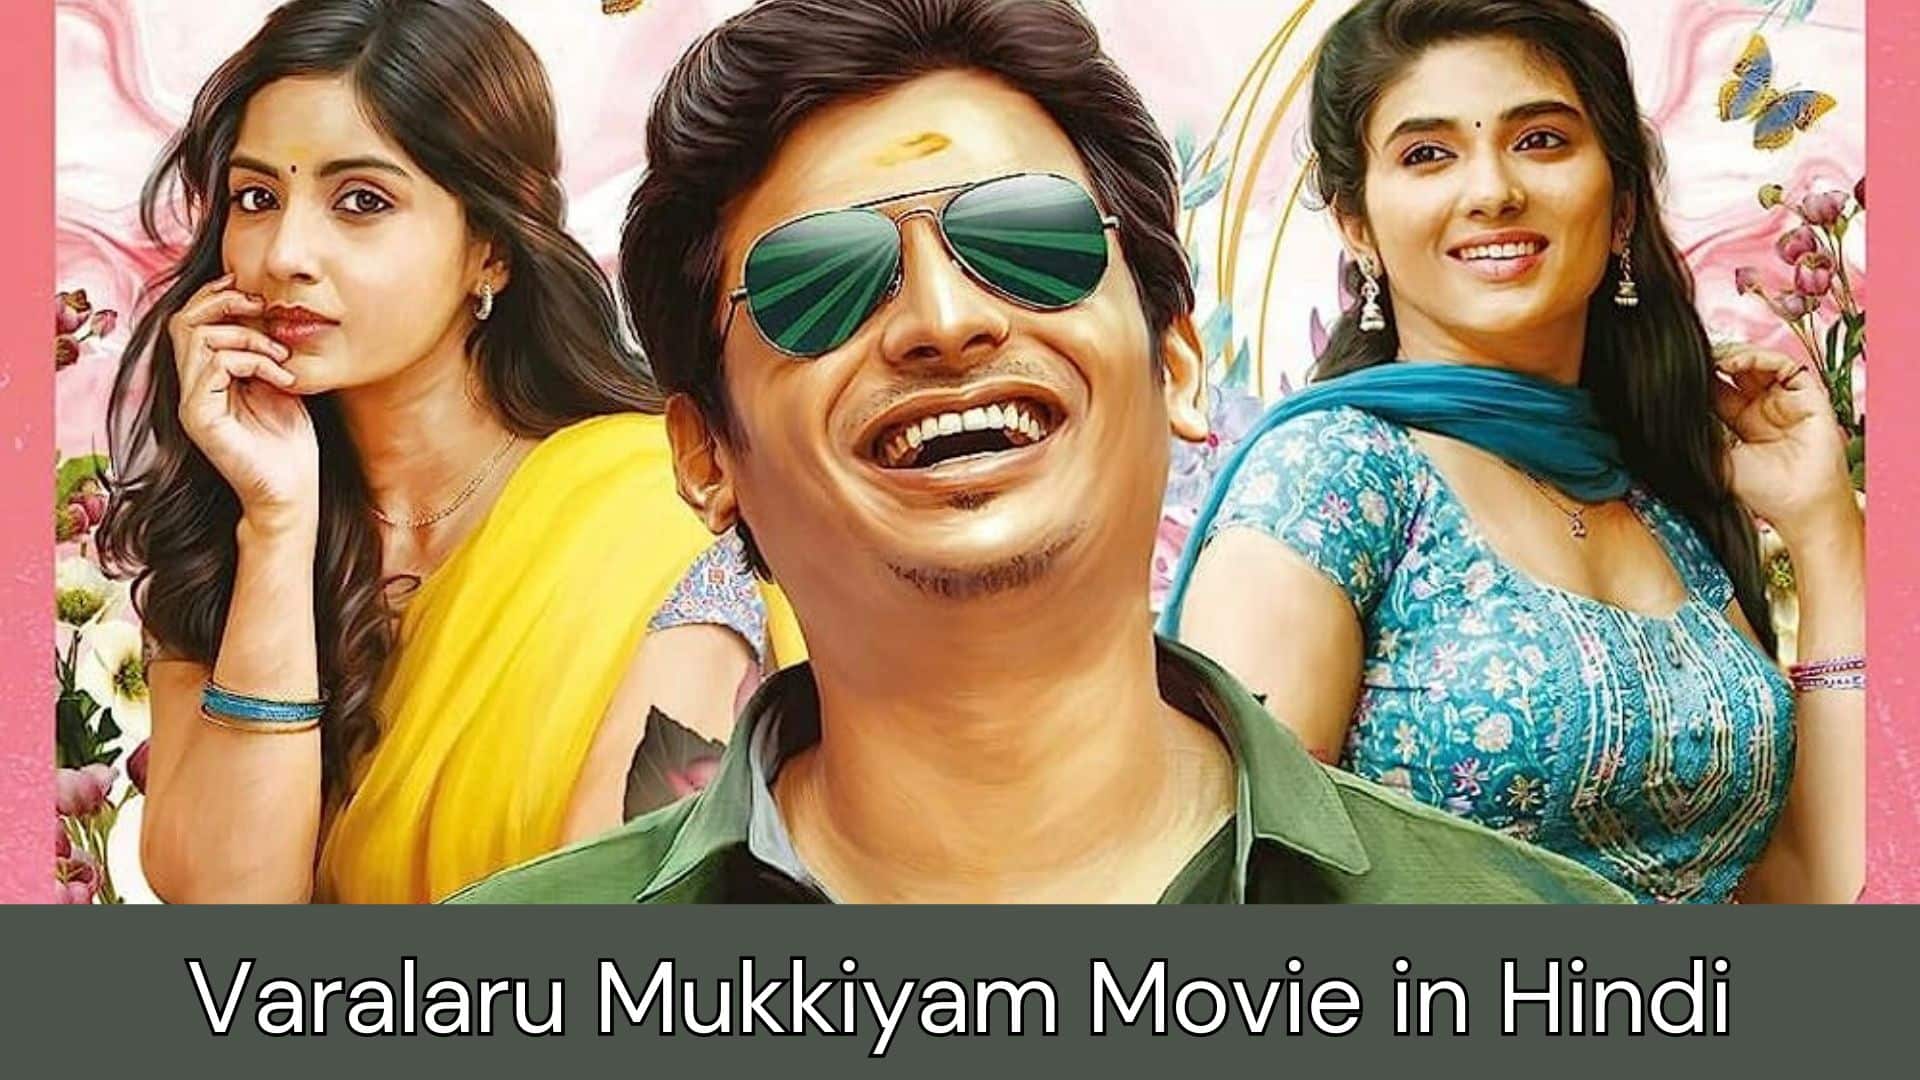 Varalaru Mukkiyam Movie Review, Cast, Heroine Name, Ending Explained